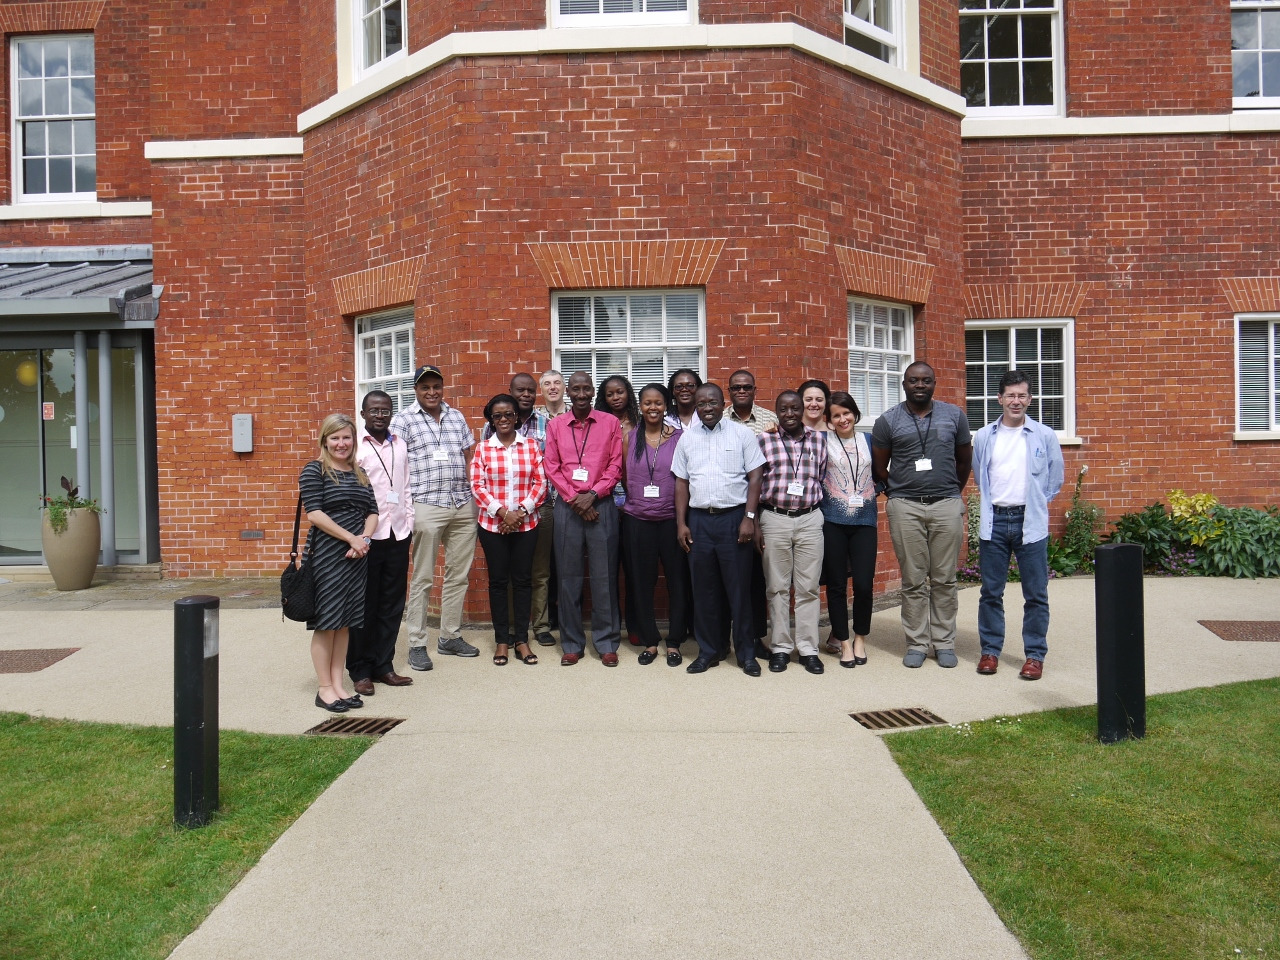 PDNA meeting, Hinxton Hall, Wellcome Genome Campus Conference Centre, June 2014. Photo courtesy of Dr Vikki Cornelius.